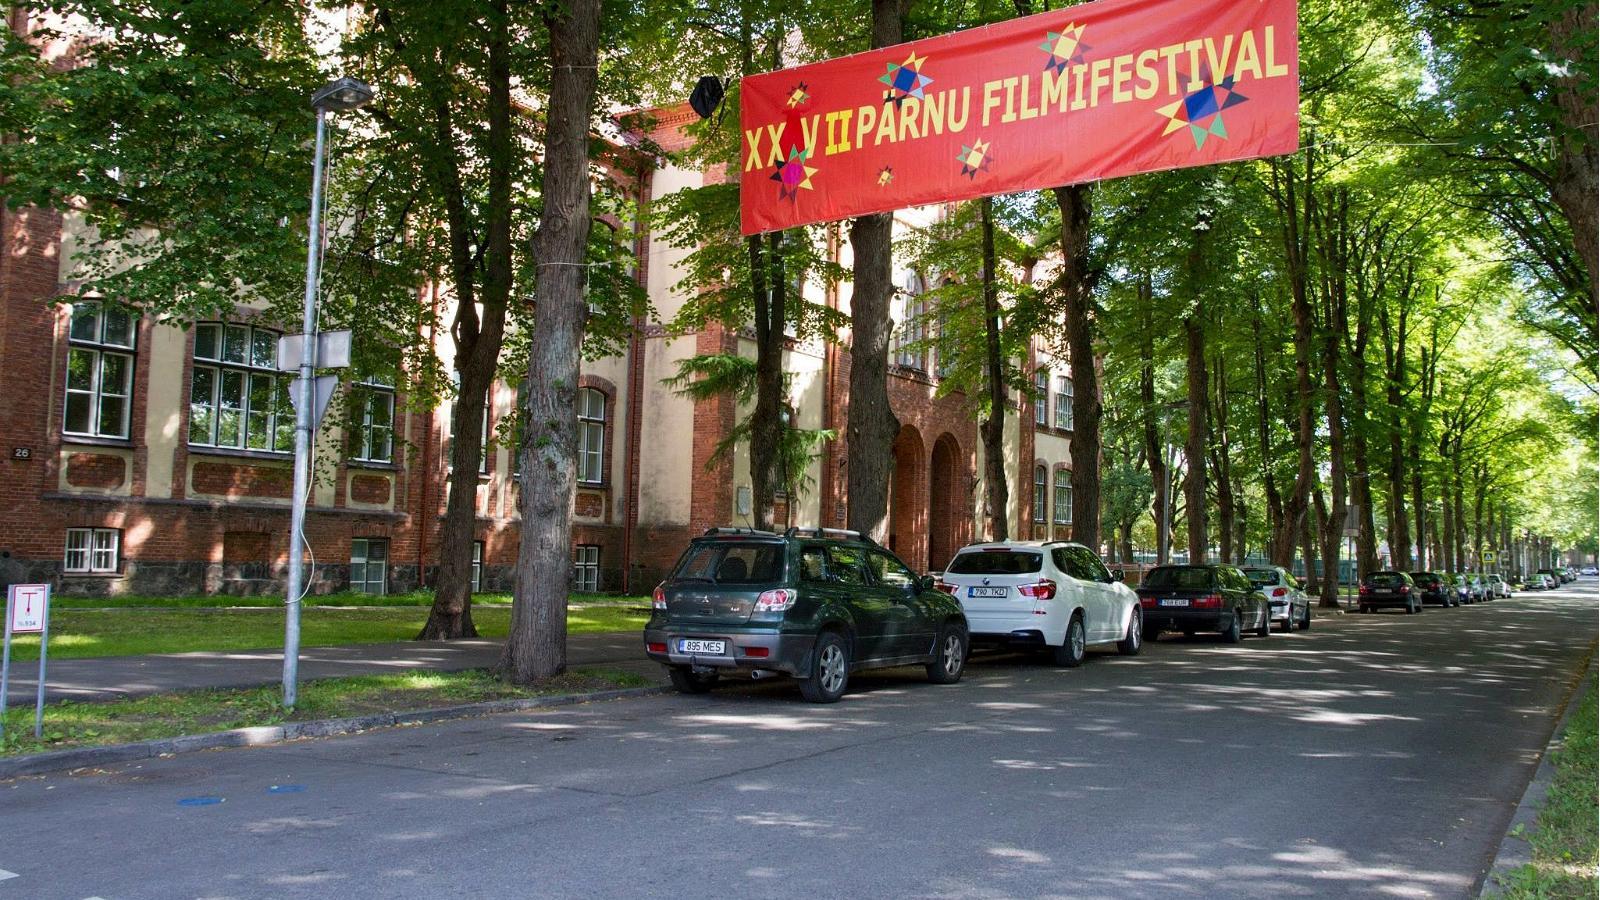 Pärnu International Documentary and Anthropology Film Festival